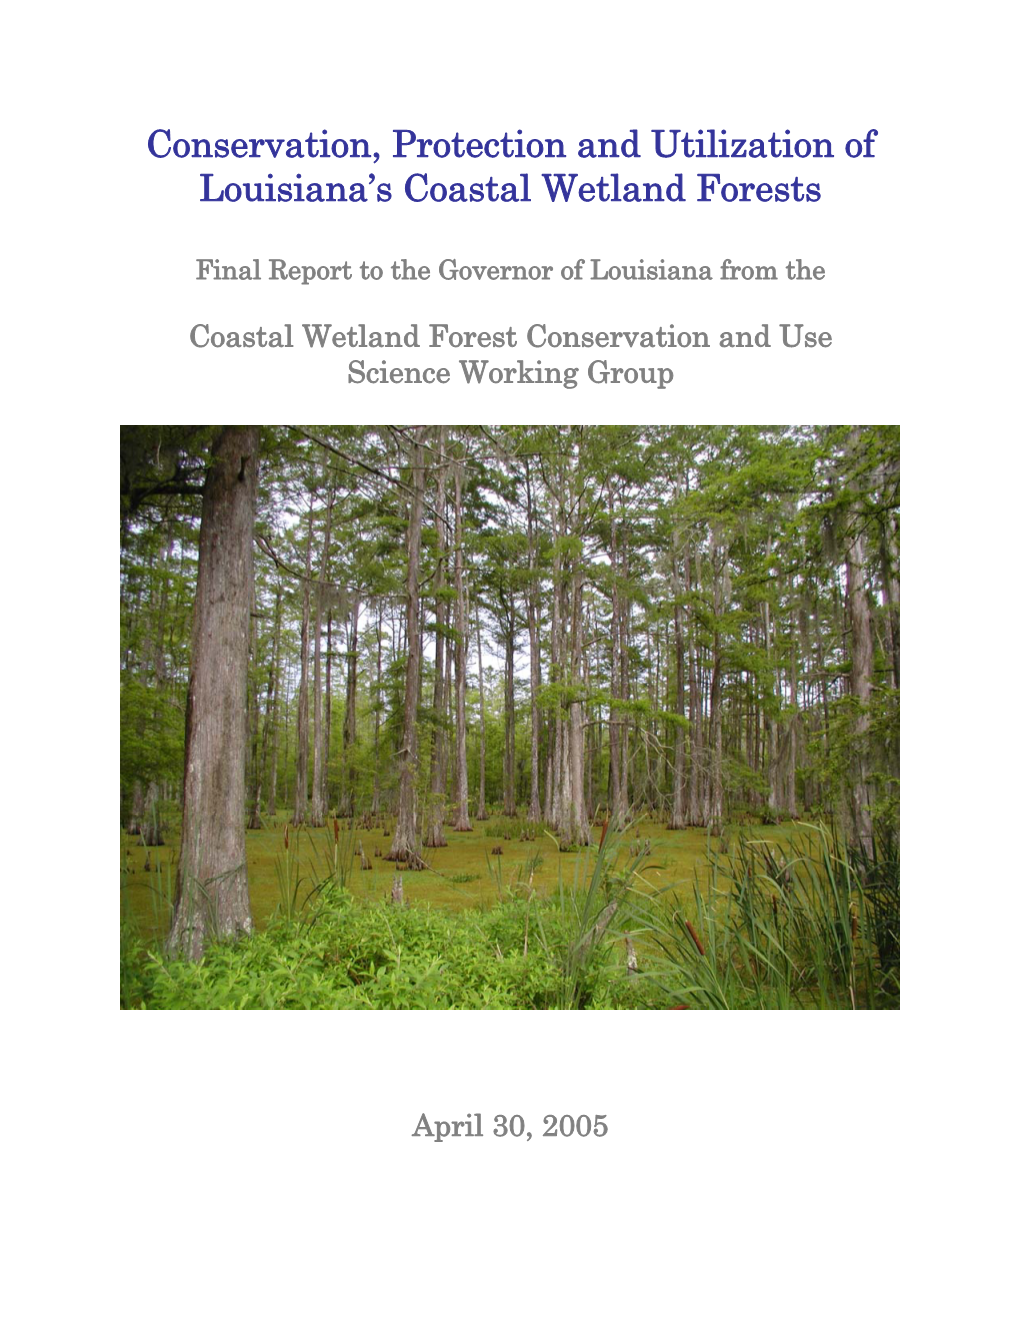 Conservation, Protection and Utilization of Louisiana's Coastal